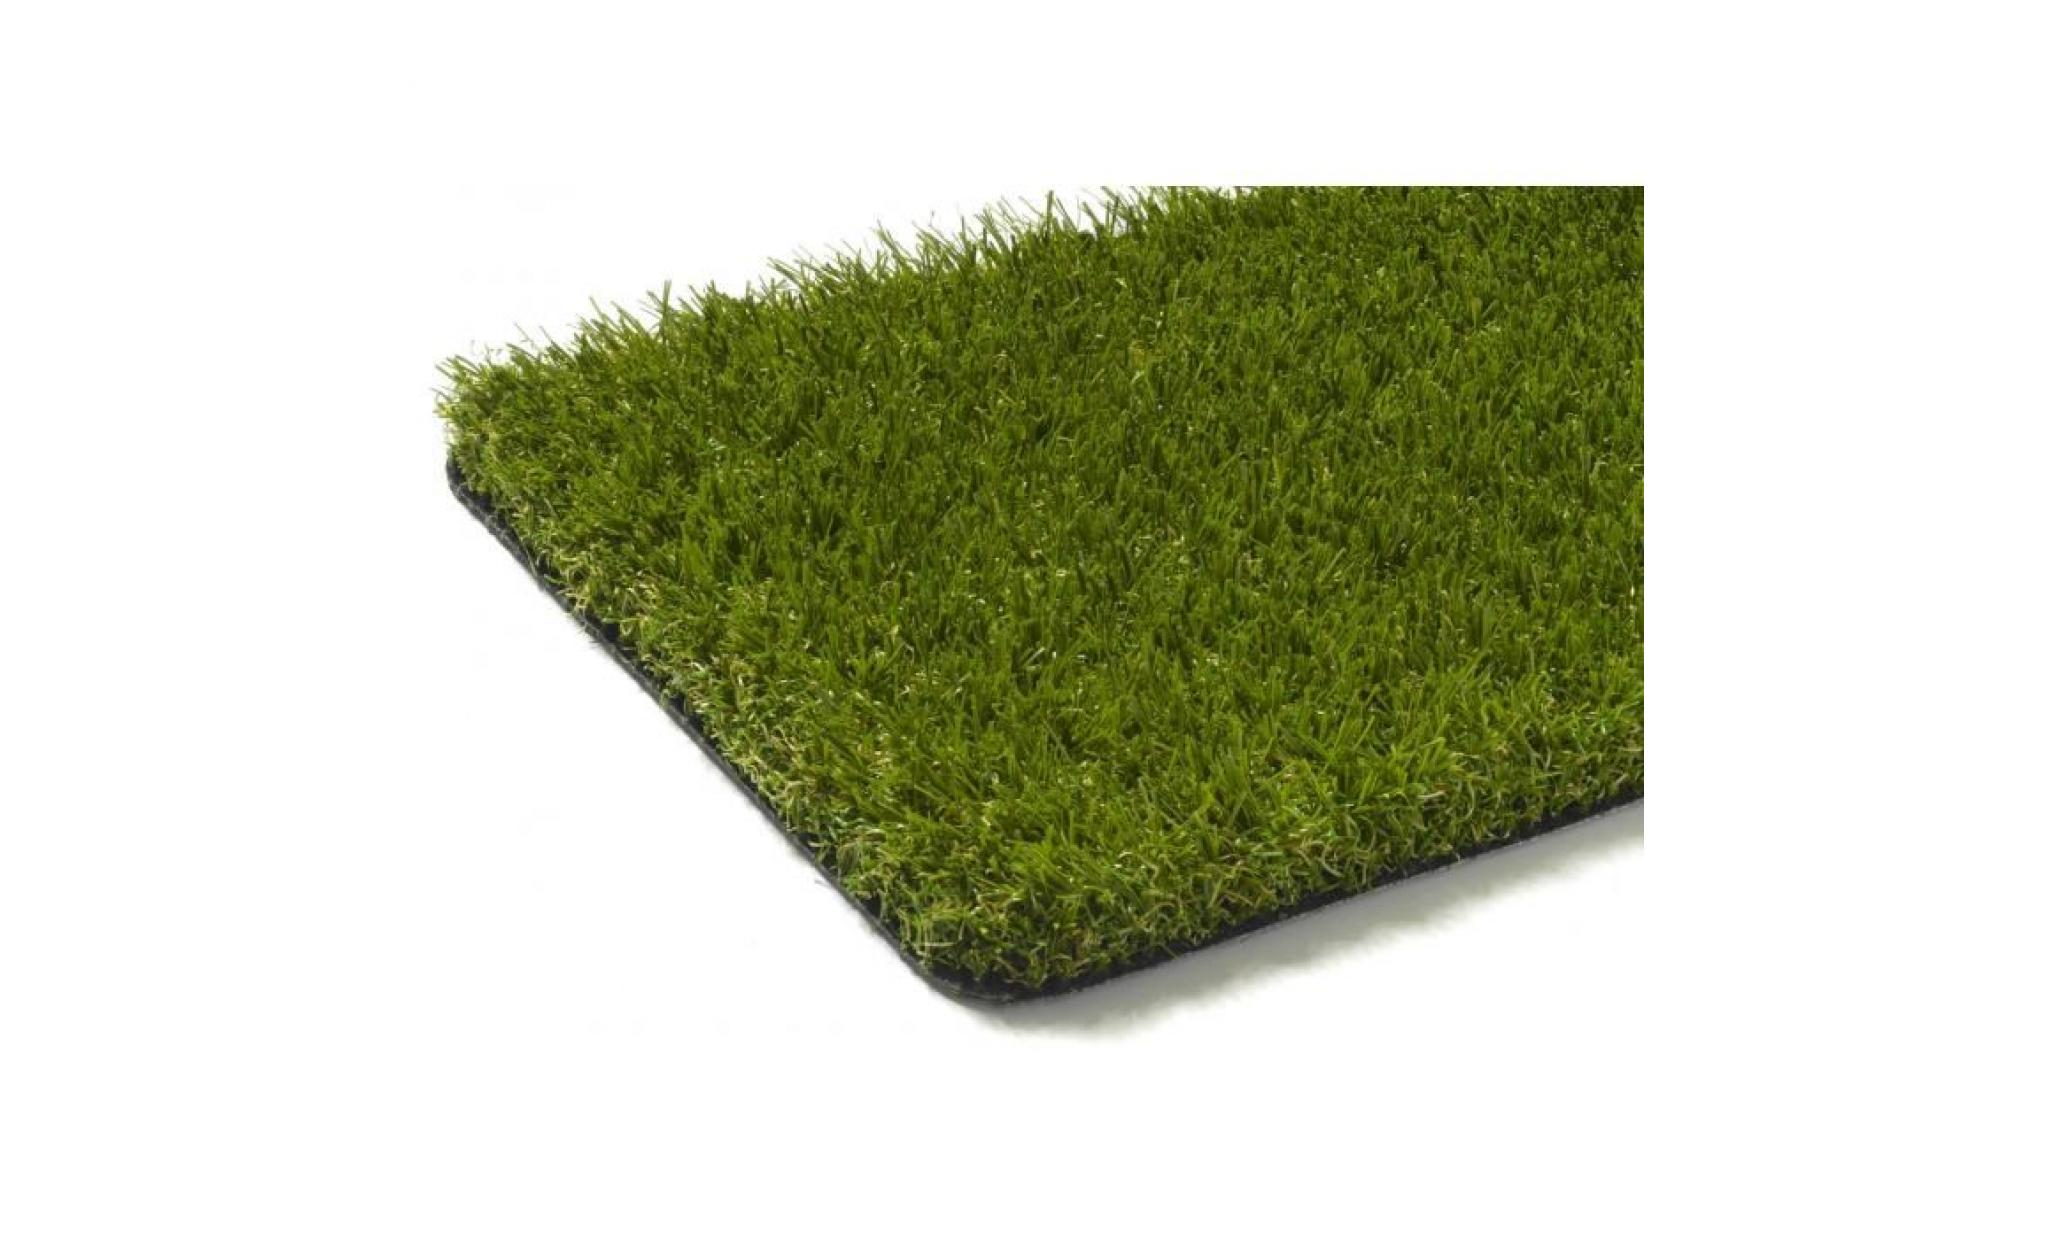 oxford   tapis type luxe gazon artificiel – pour jardin, terrasse, balcon   vert  [200x150 cm]